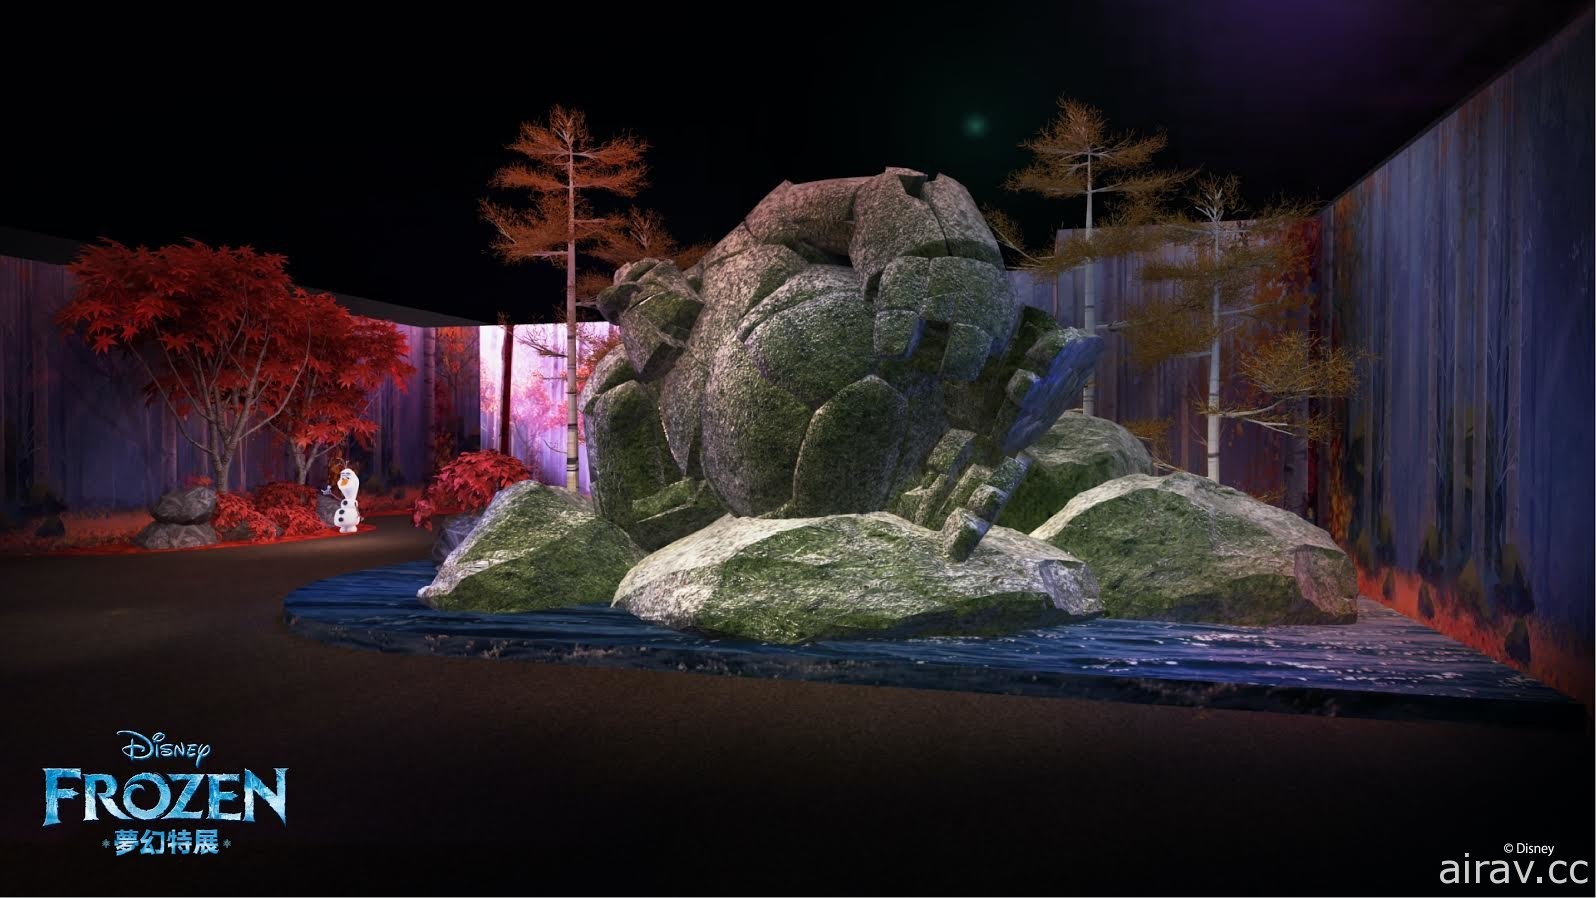 「FROZEN 冰雪奇緣夢幻特展」12 月在台揭幕 還原經典場景 科技互動體驗冰雪幻境